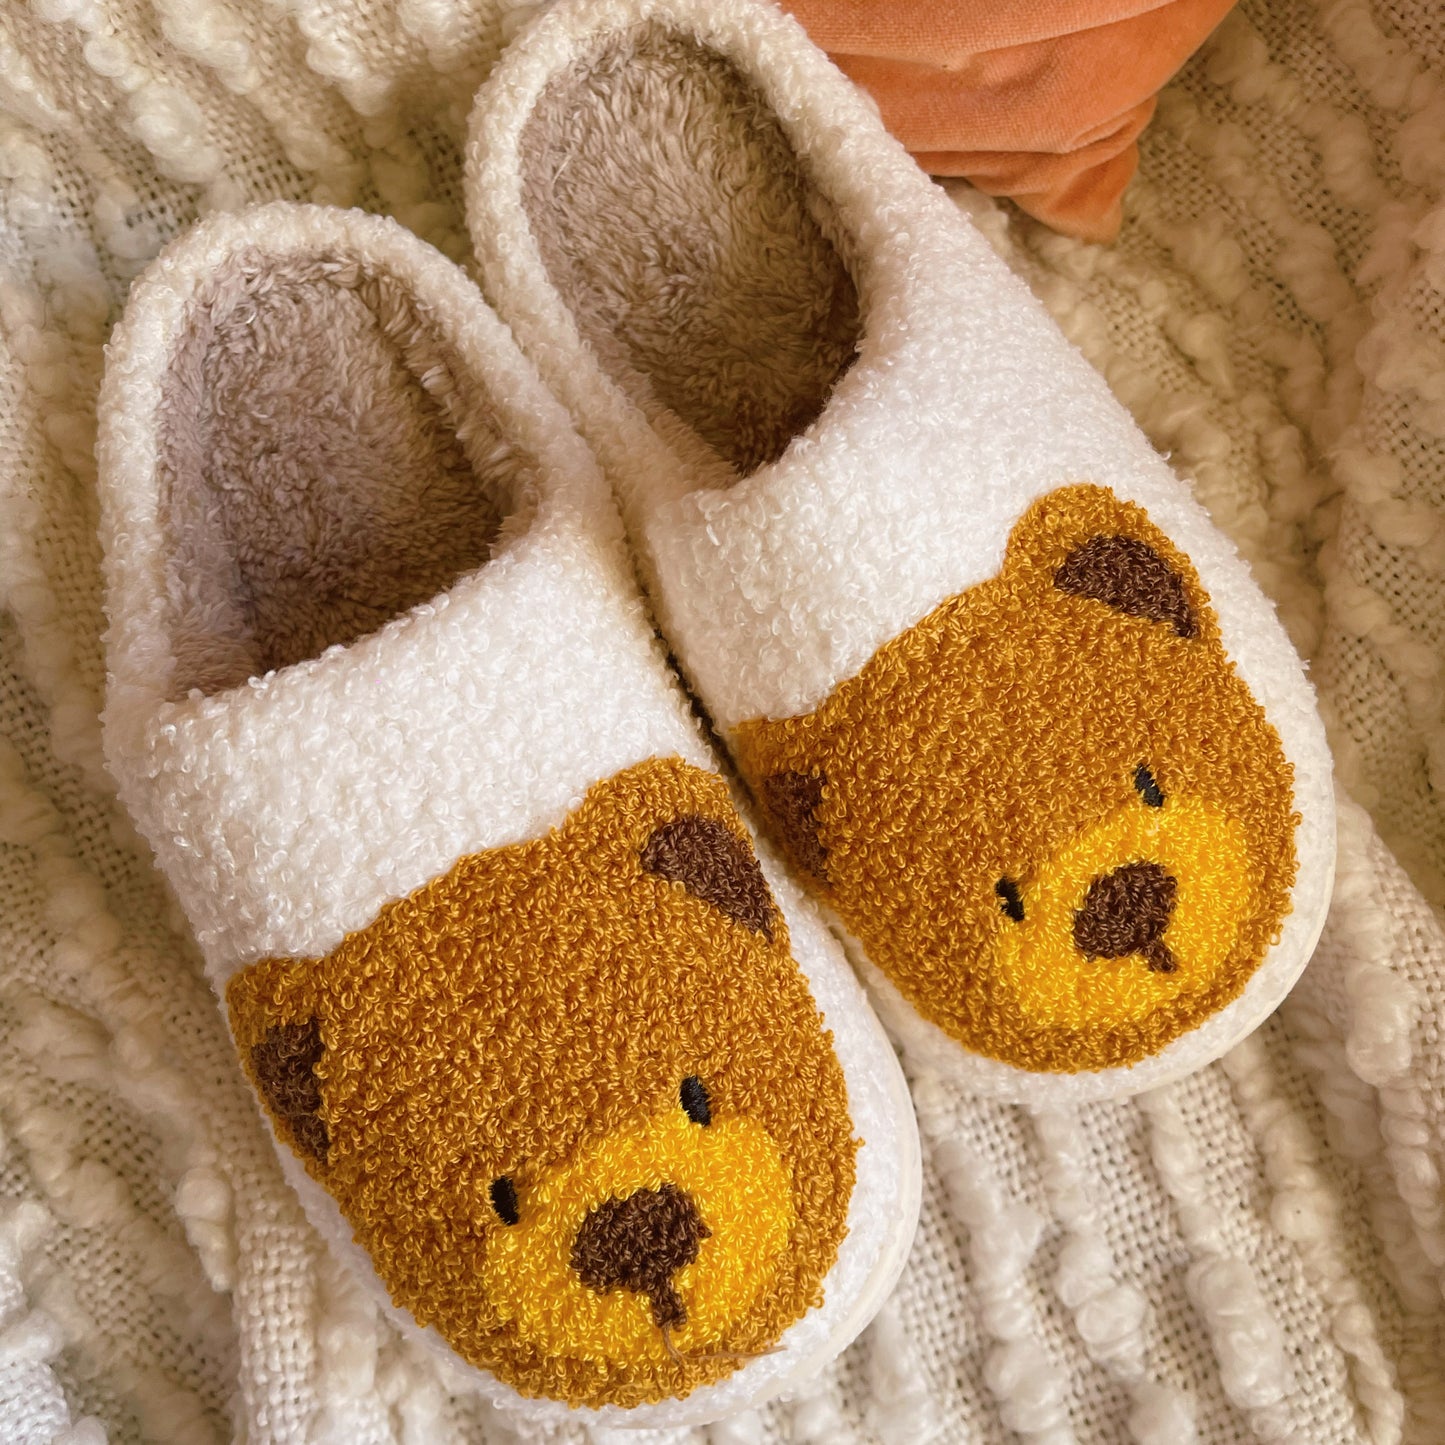 Teddy Bear Slippers